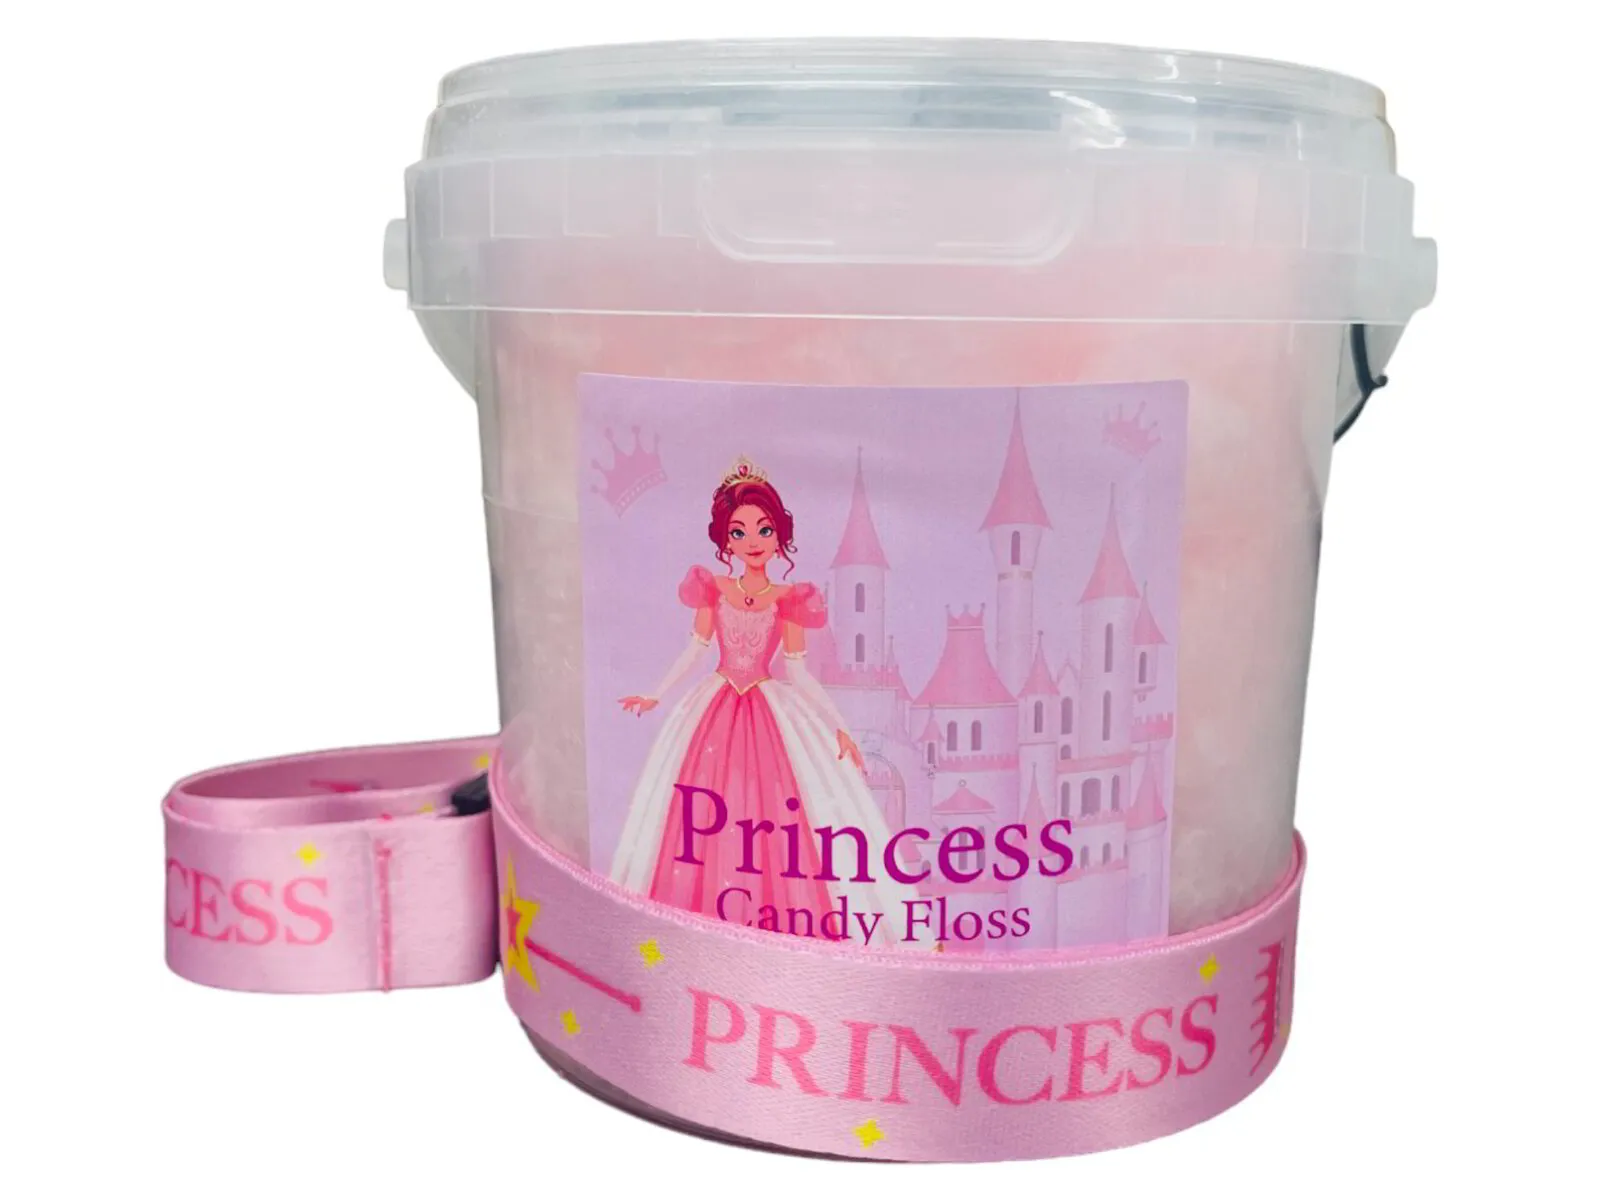 12x Princess Candy Floss Tubs with Lanyard